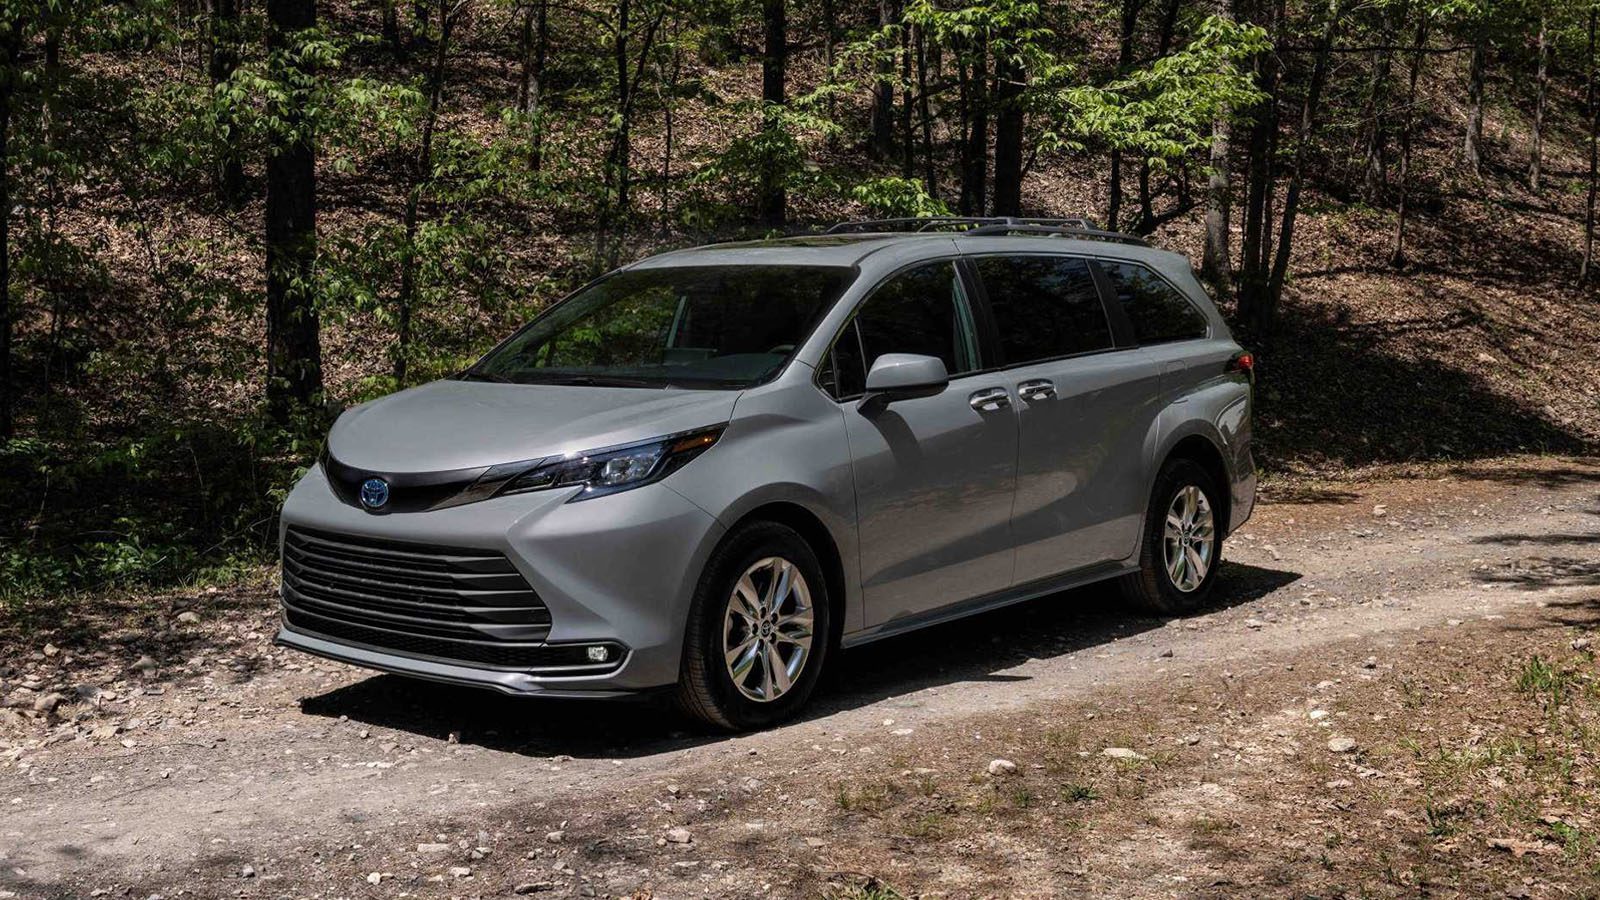 2022 grey Toyota Sienna minivan in the woods